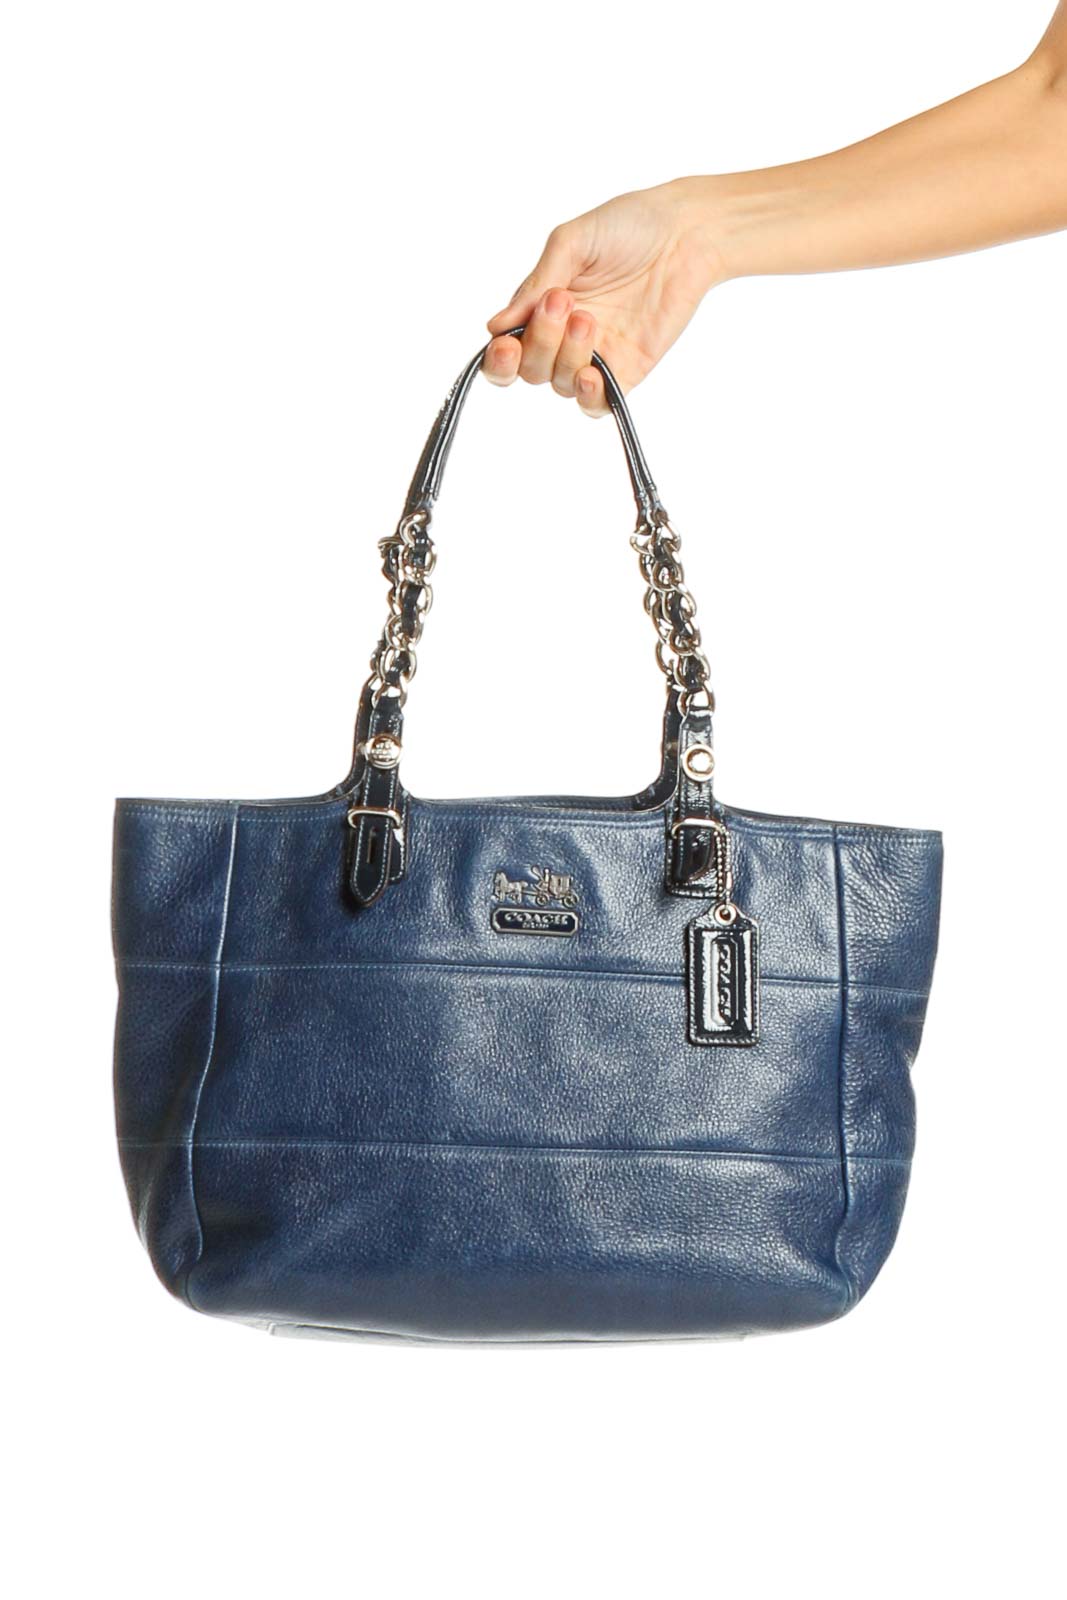 Blue Tote Bag Front